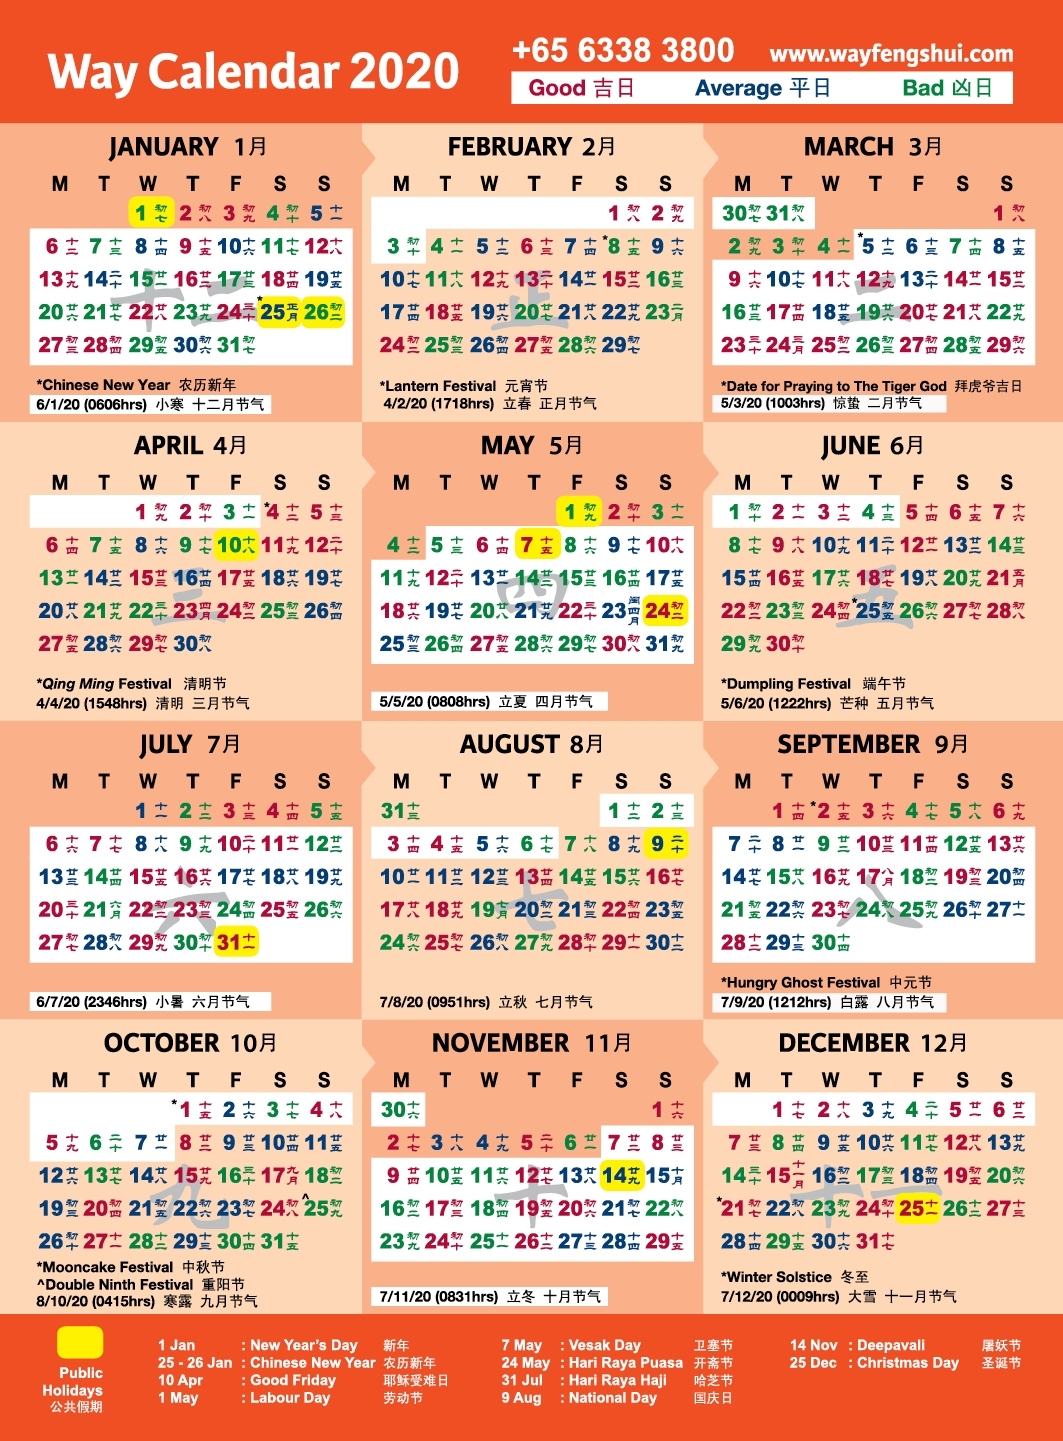 2020 Way Calendar - Feng Shui Master Singapore, Chinese